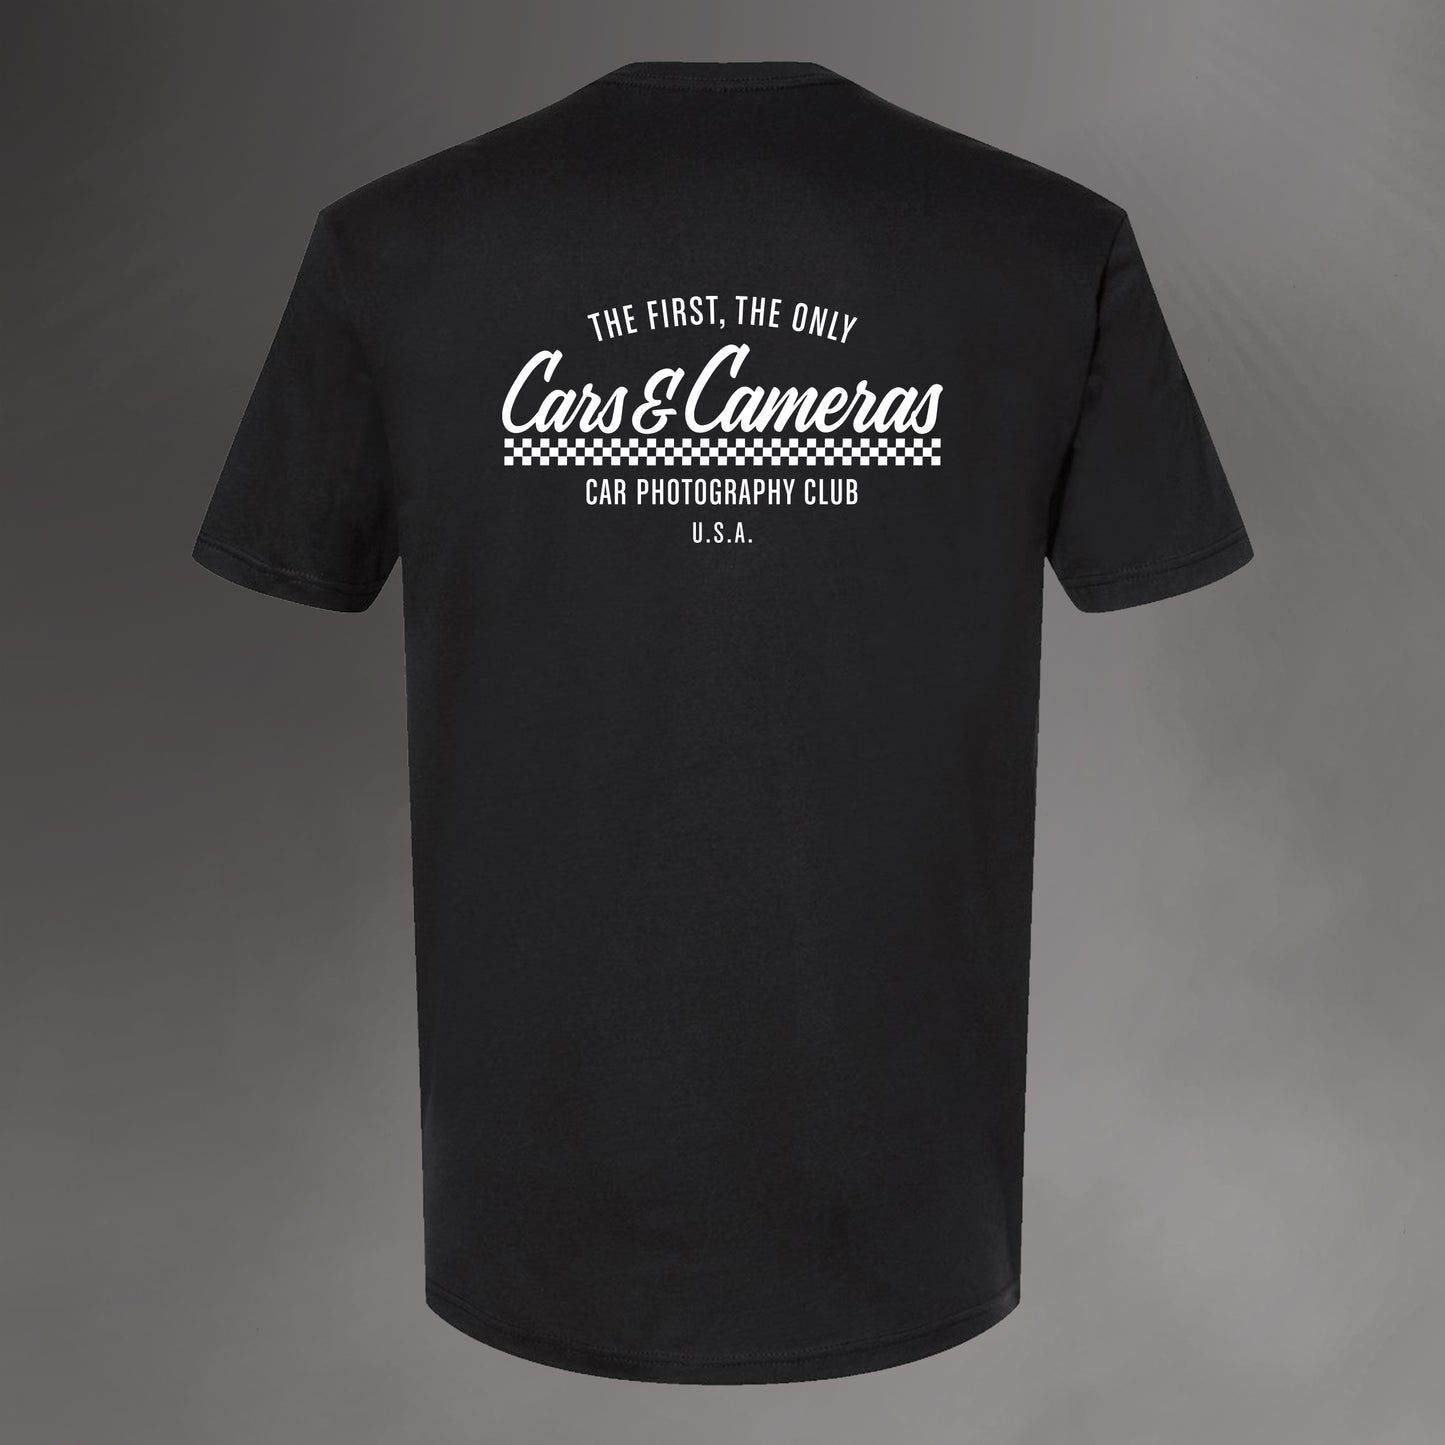 The Cars & Cameras Car Photography Club T-Shirt (Black)